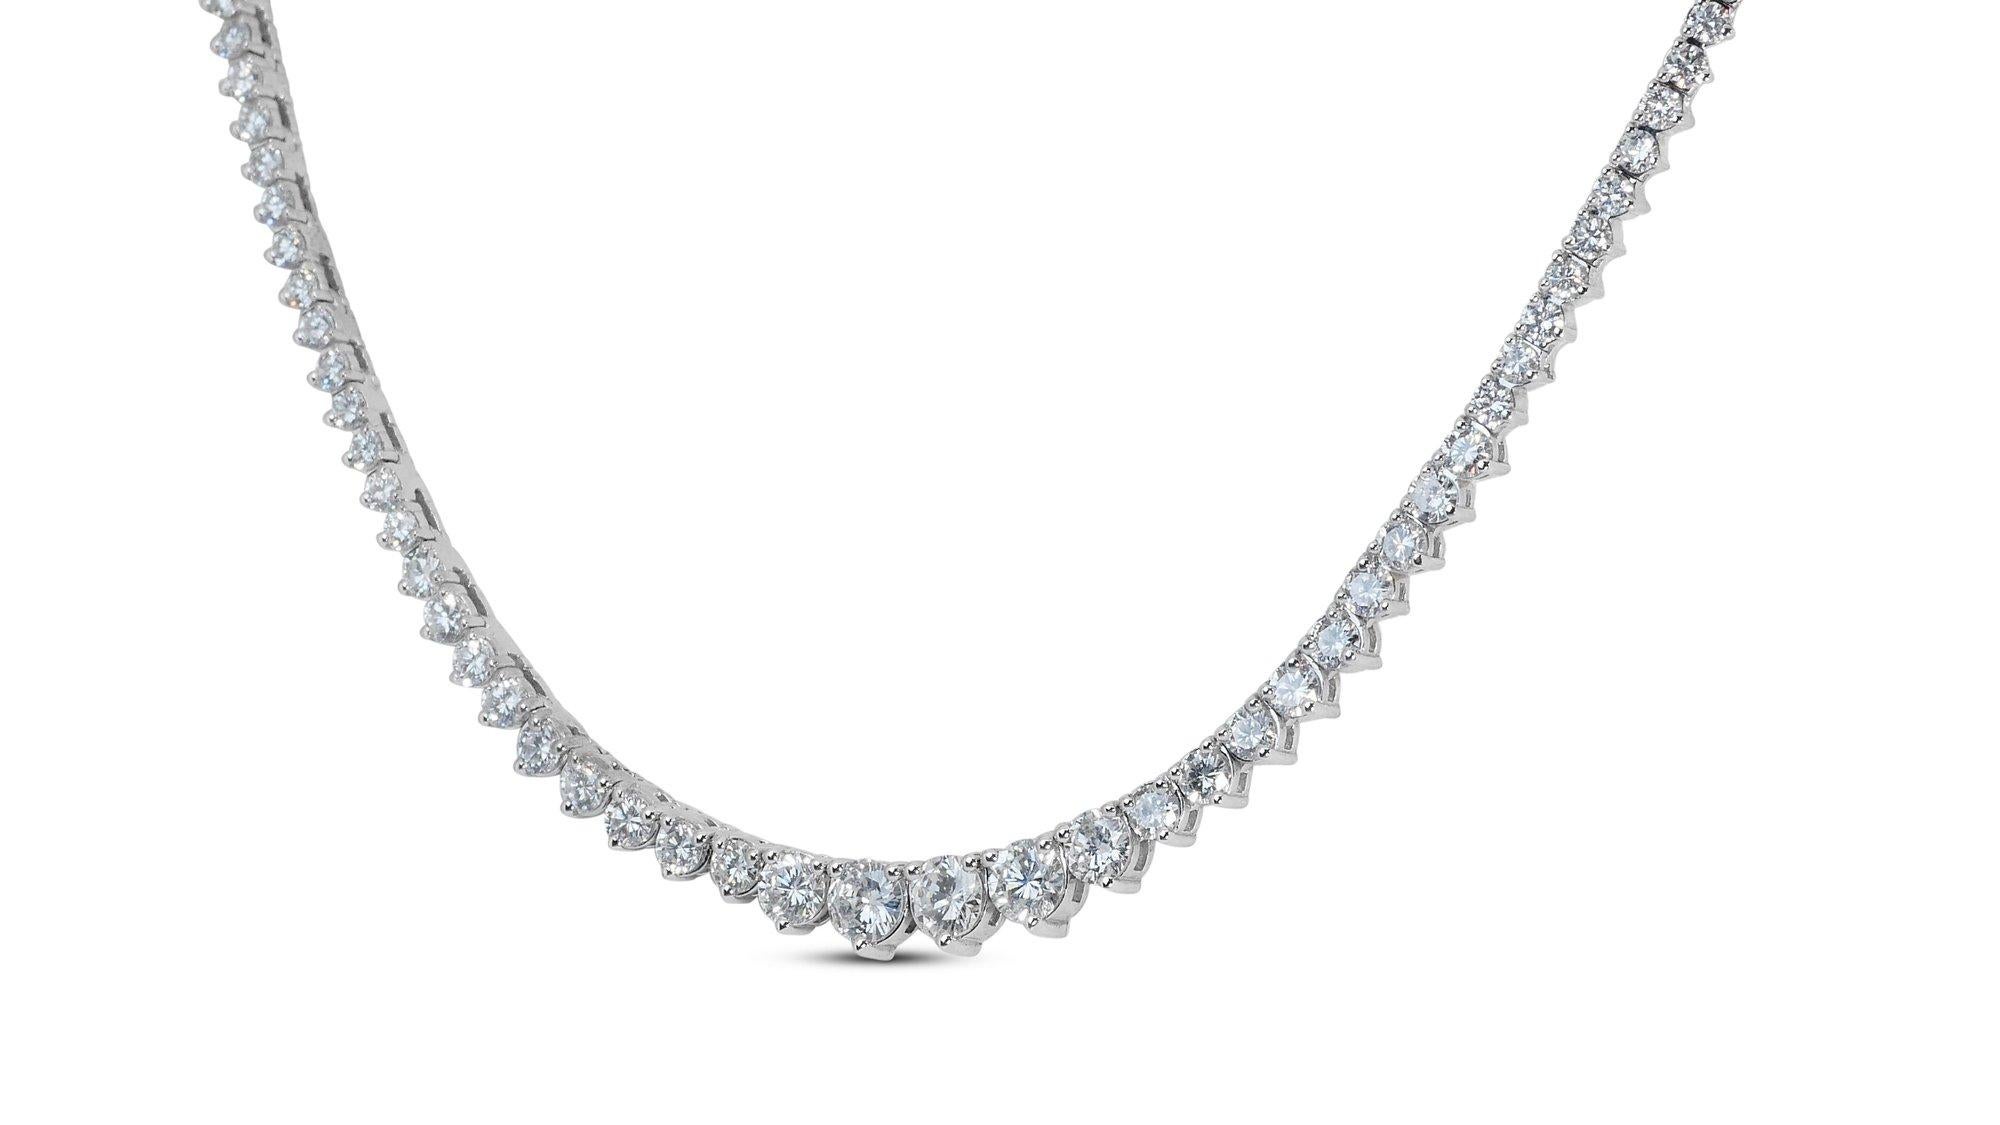 Ravishing 18k White Gold Necklace w/ 5.78 ct Natural Diamonds IGI Certificate For Sale 6